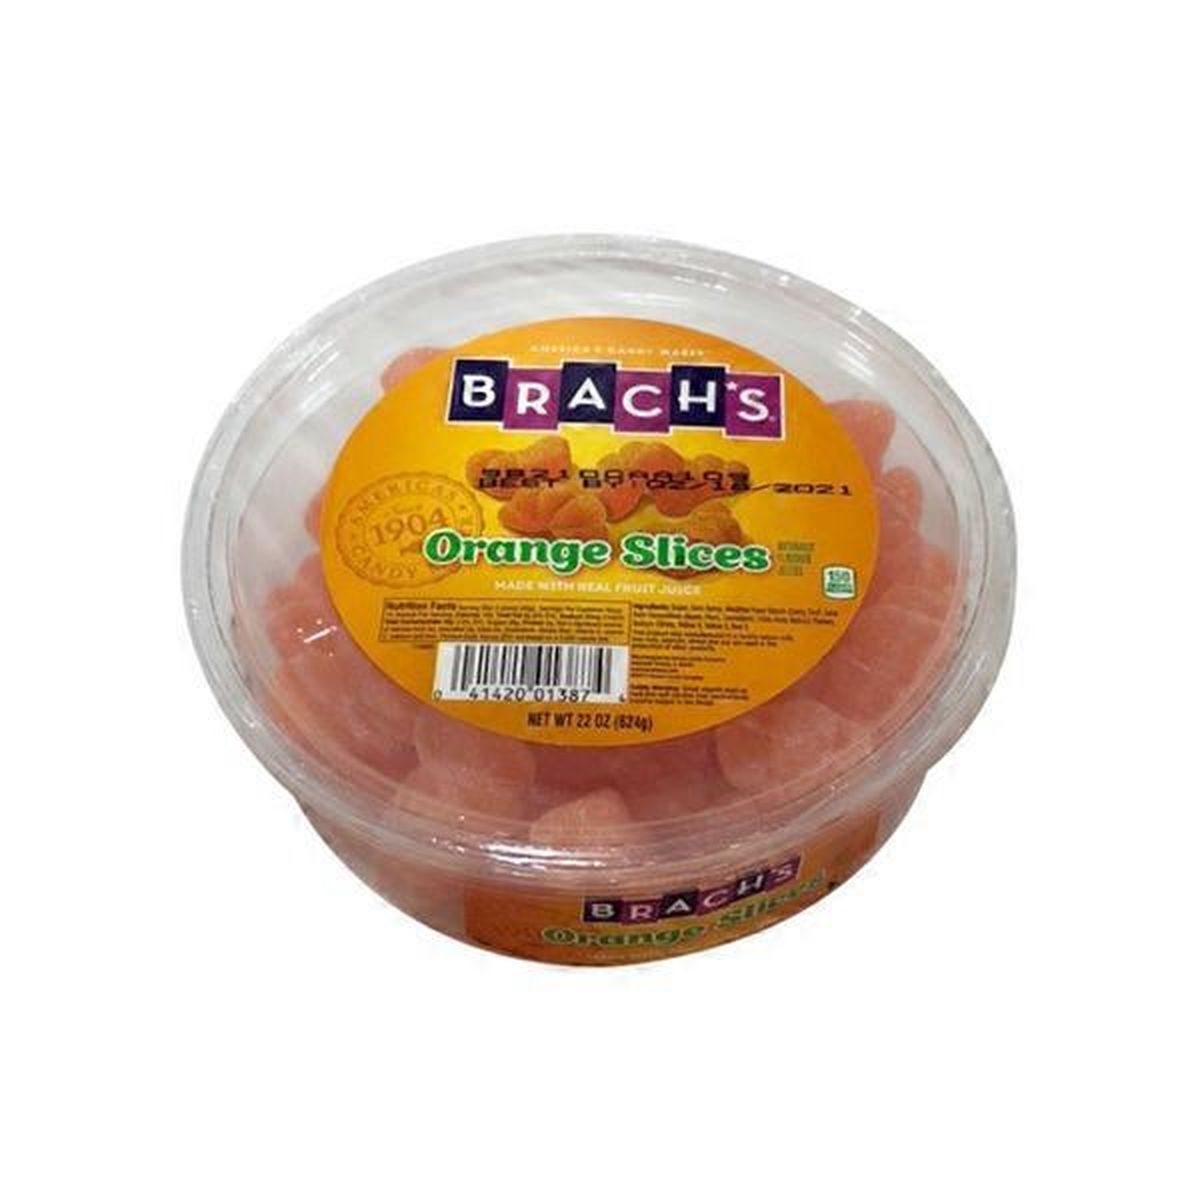 Brach's Orange Slices Jellies (22 oz) Delivery or Pickup Near Me - Instacart